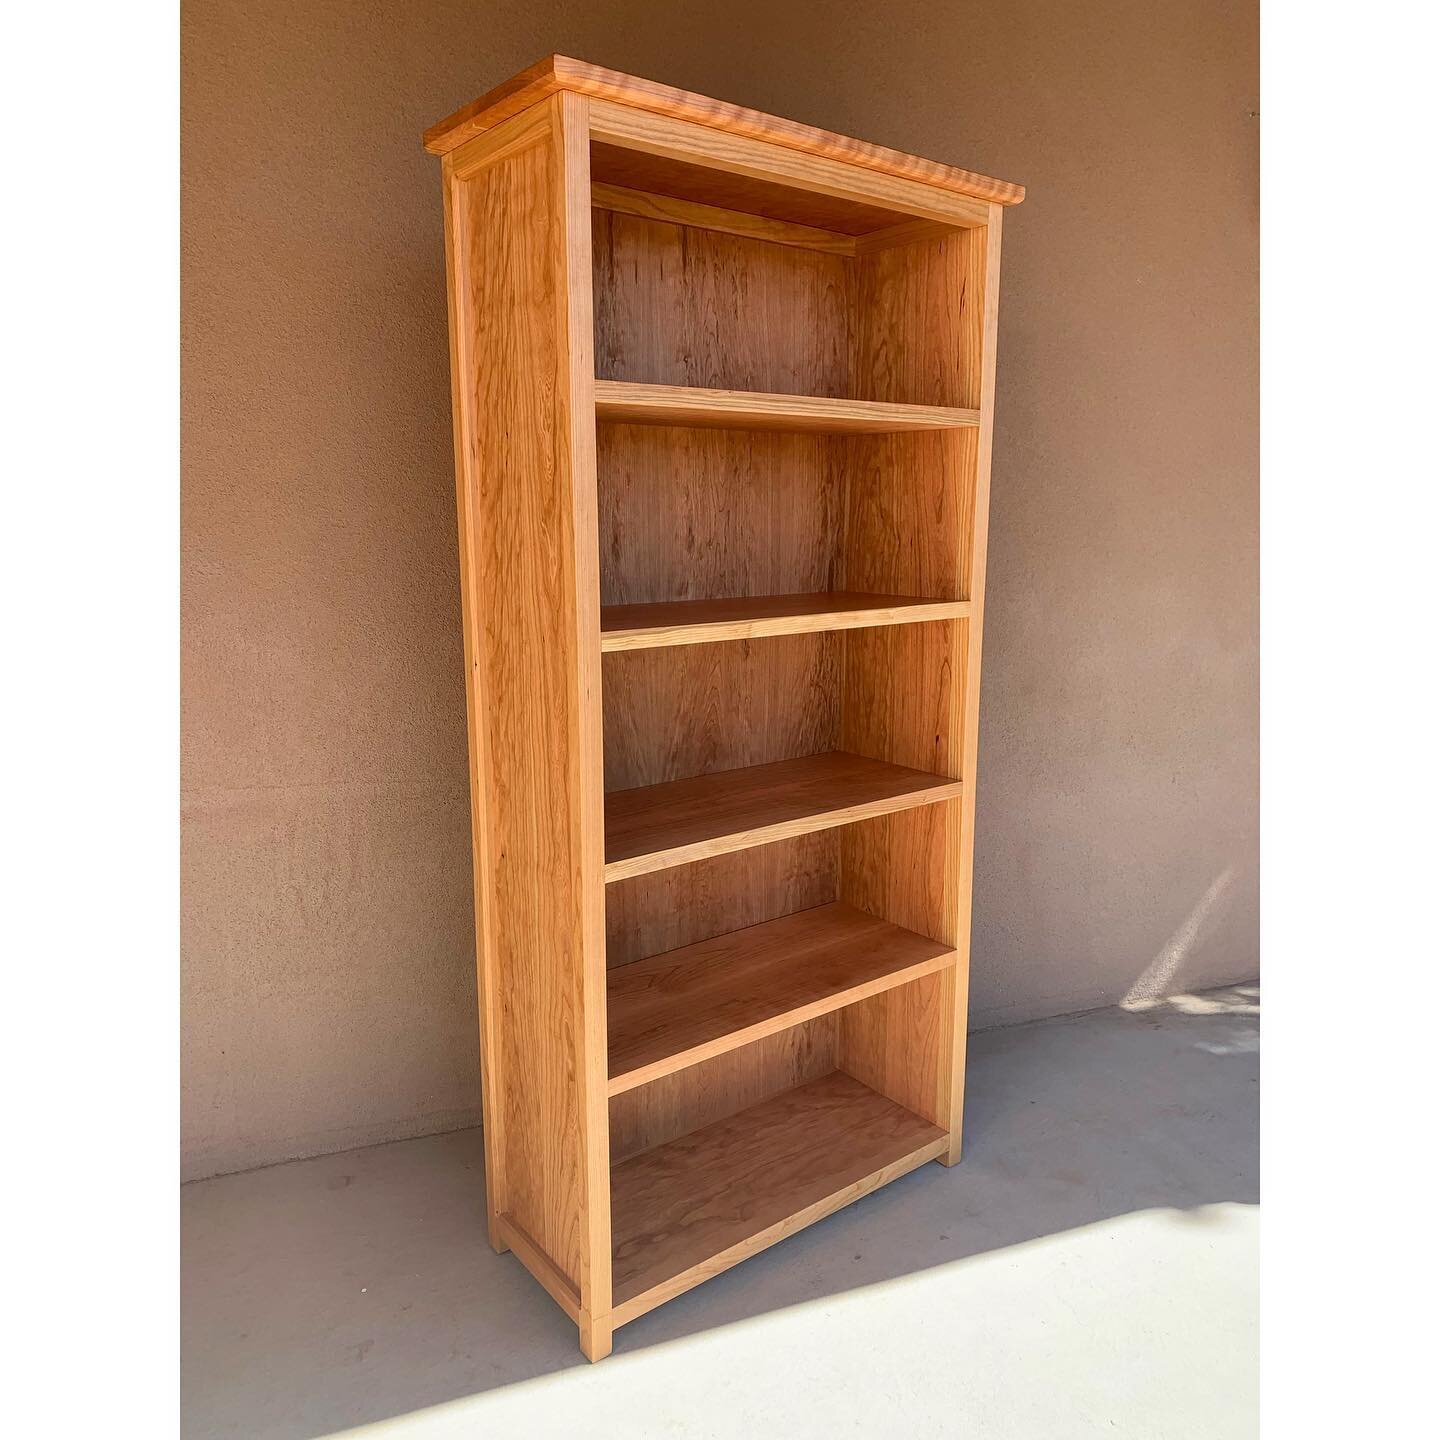 Cherry Bookshelf &bull; 6ft x 3ft &bull; Beautiful curly cherry wood from @alpinebuilderssupplyco 
.
.
.

#tetradesignworks #cherry #bookshelf #furnituredesign #furniture #design #interiordesign #furnituremaker #moderndesign #albuquerque #santafenm